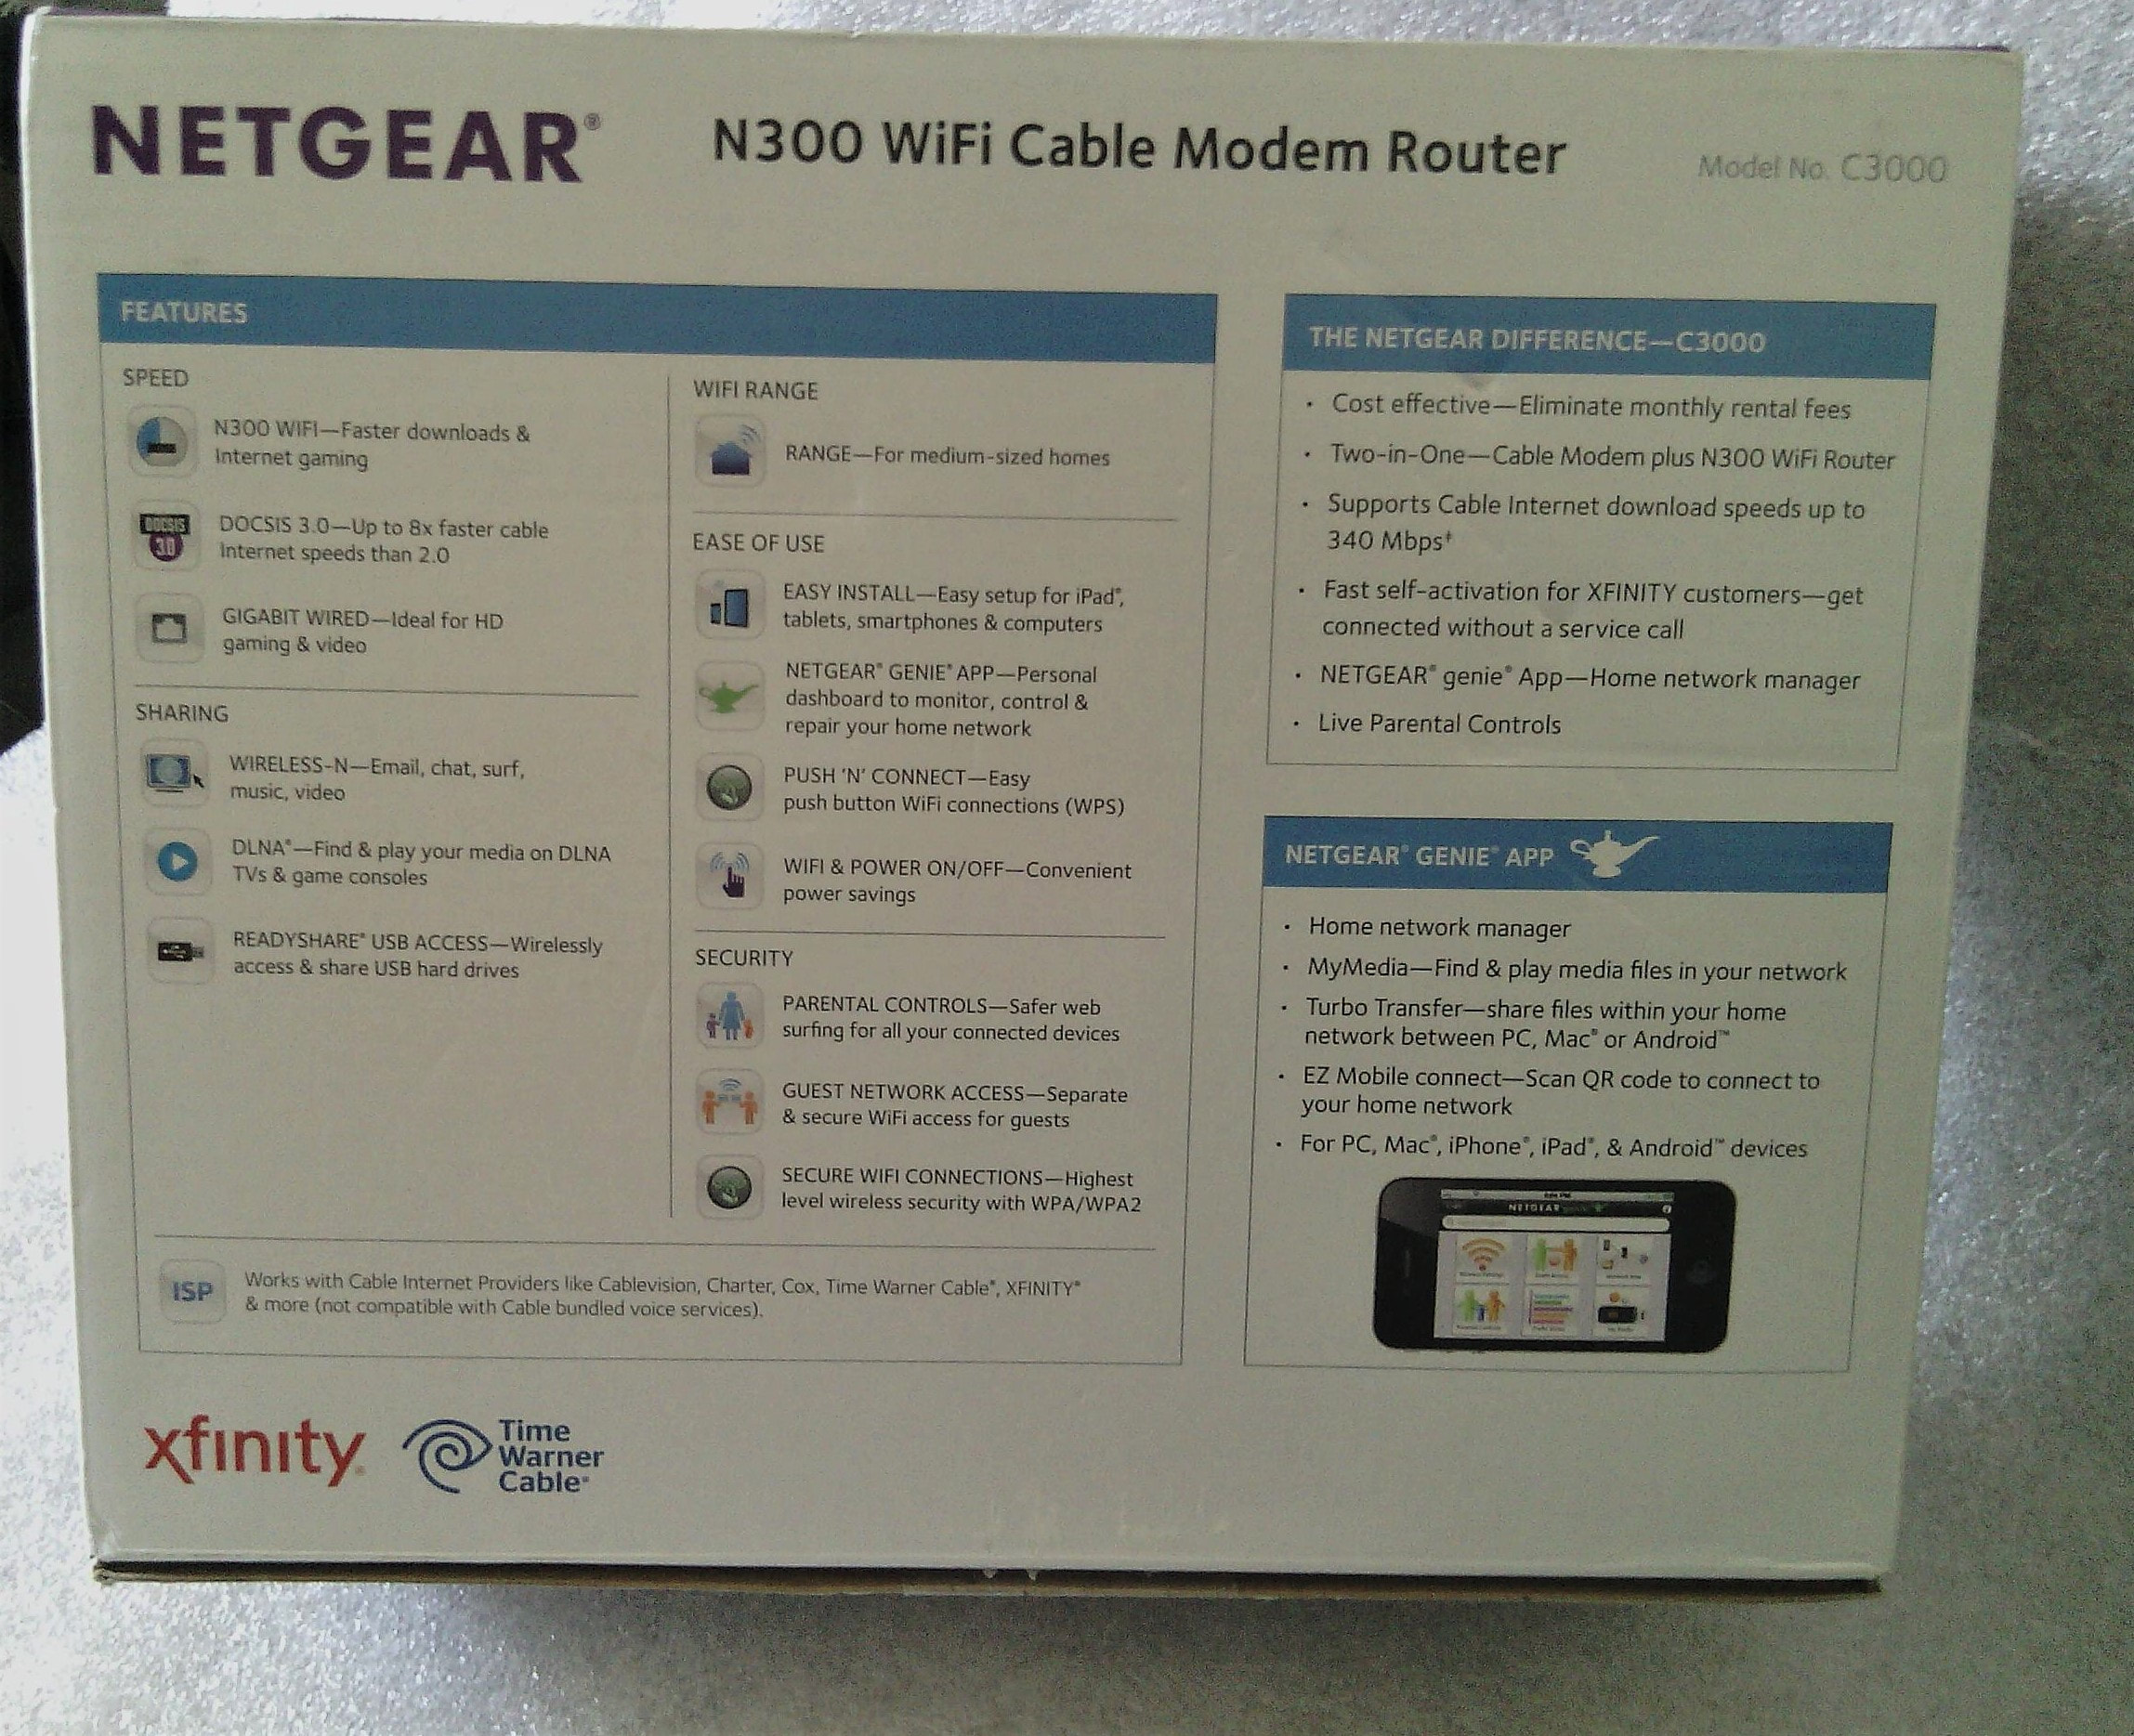 NETGEAR C3000 N300 WiFi Cable Modem Router